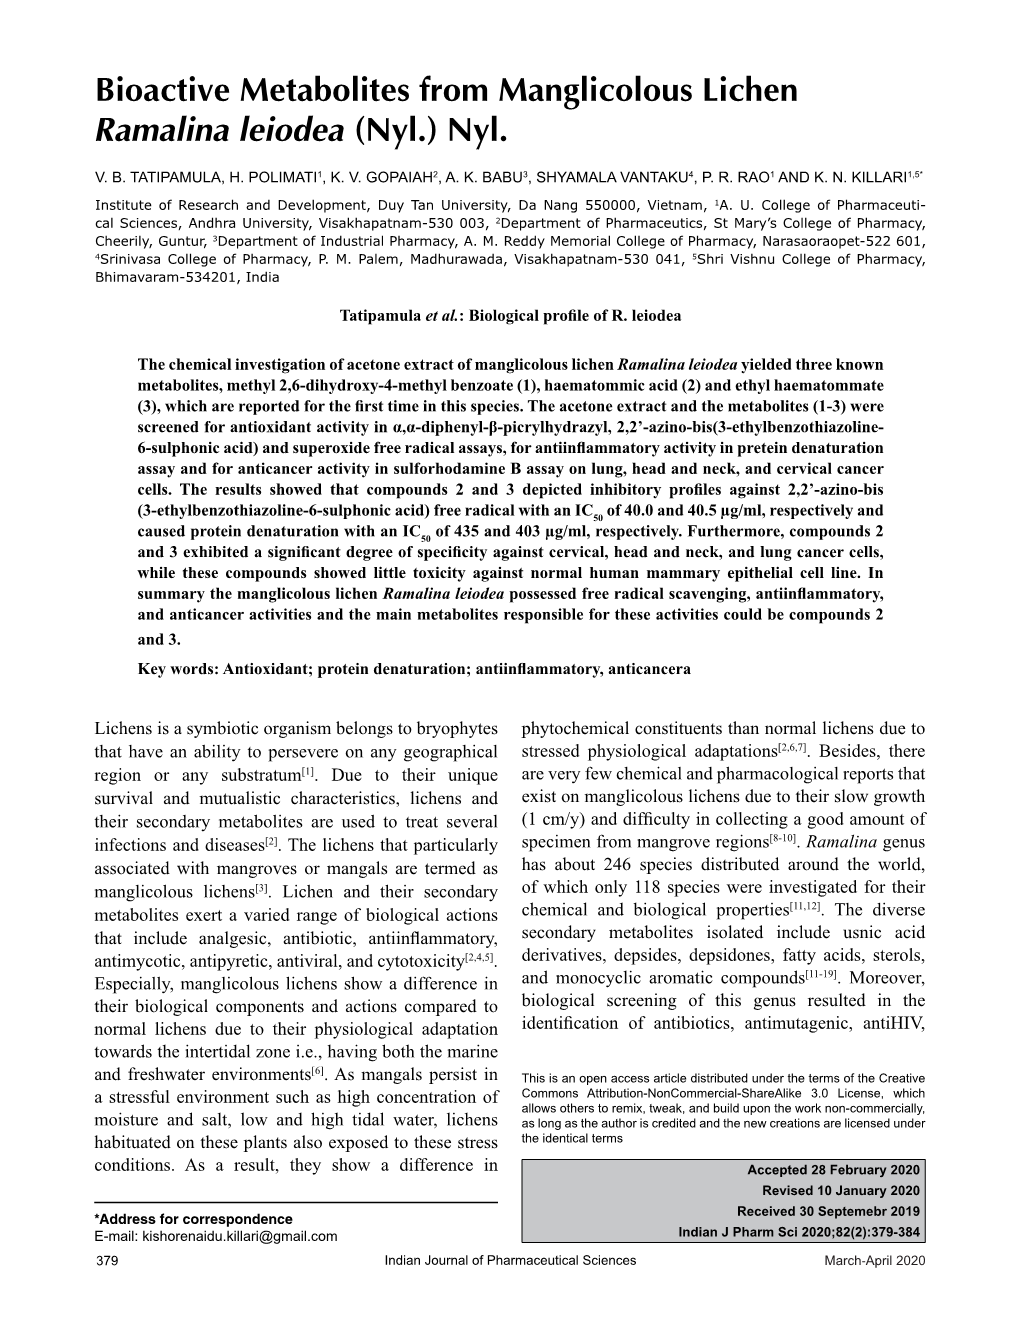 Bioactive Metabolites from Manglicolous Lichen Ramalina Leiodea (Nyl.) Nyl